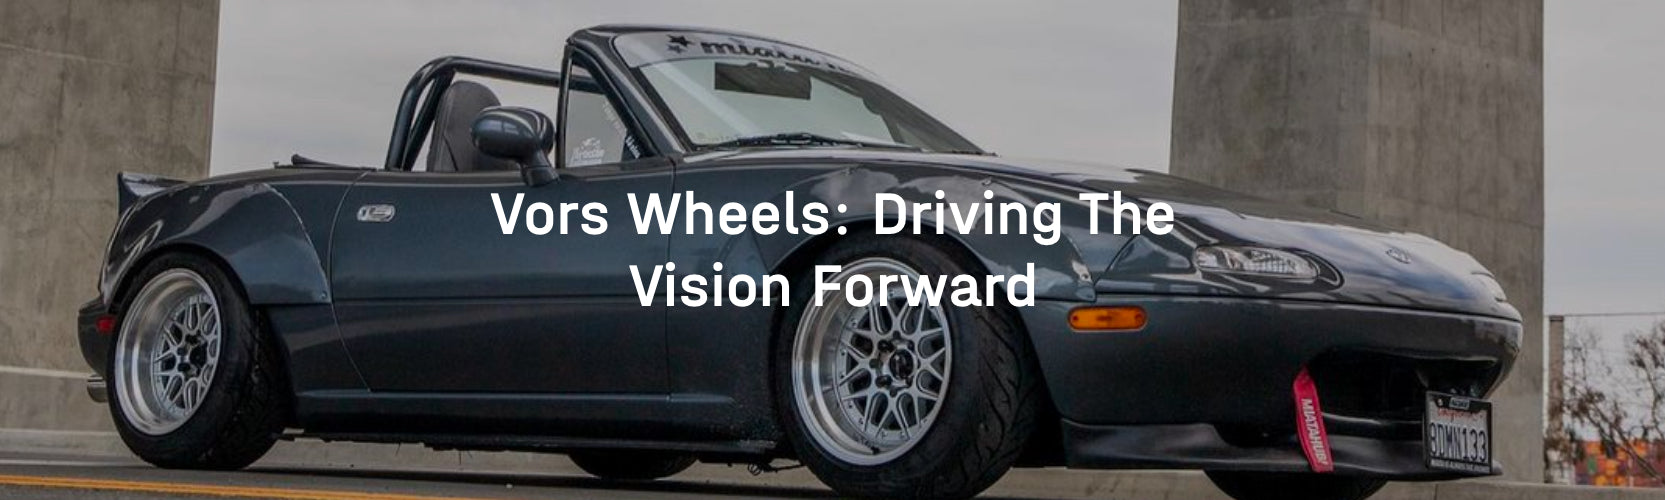 Vors Wheels: Driving the Vision Forward